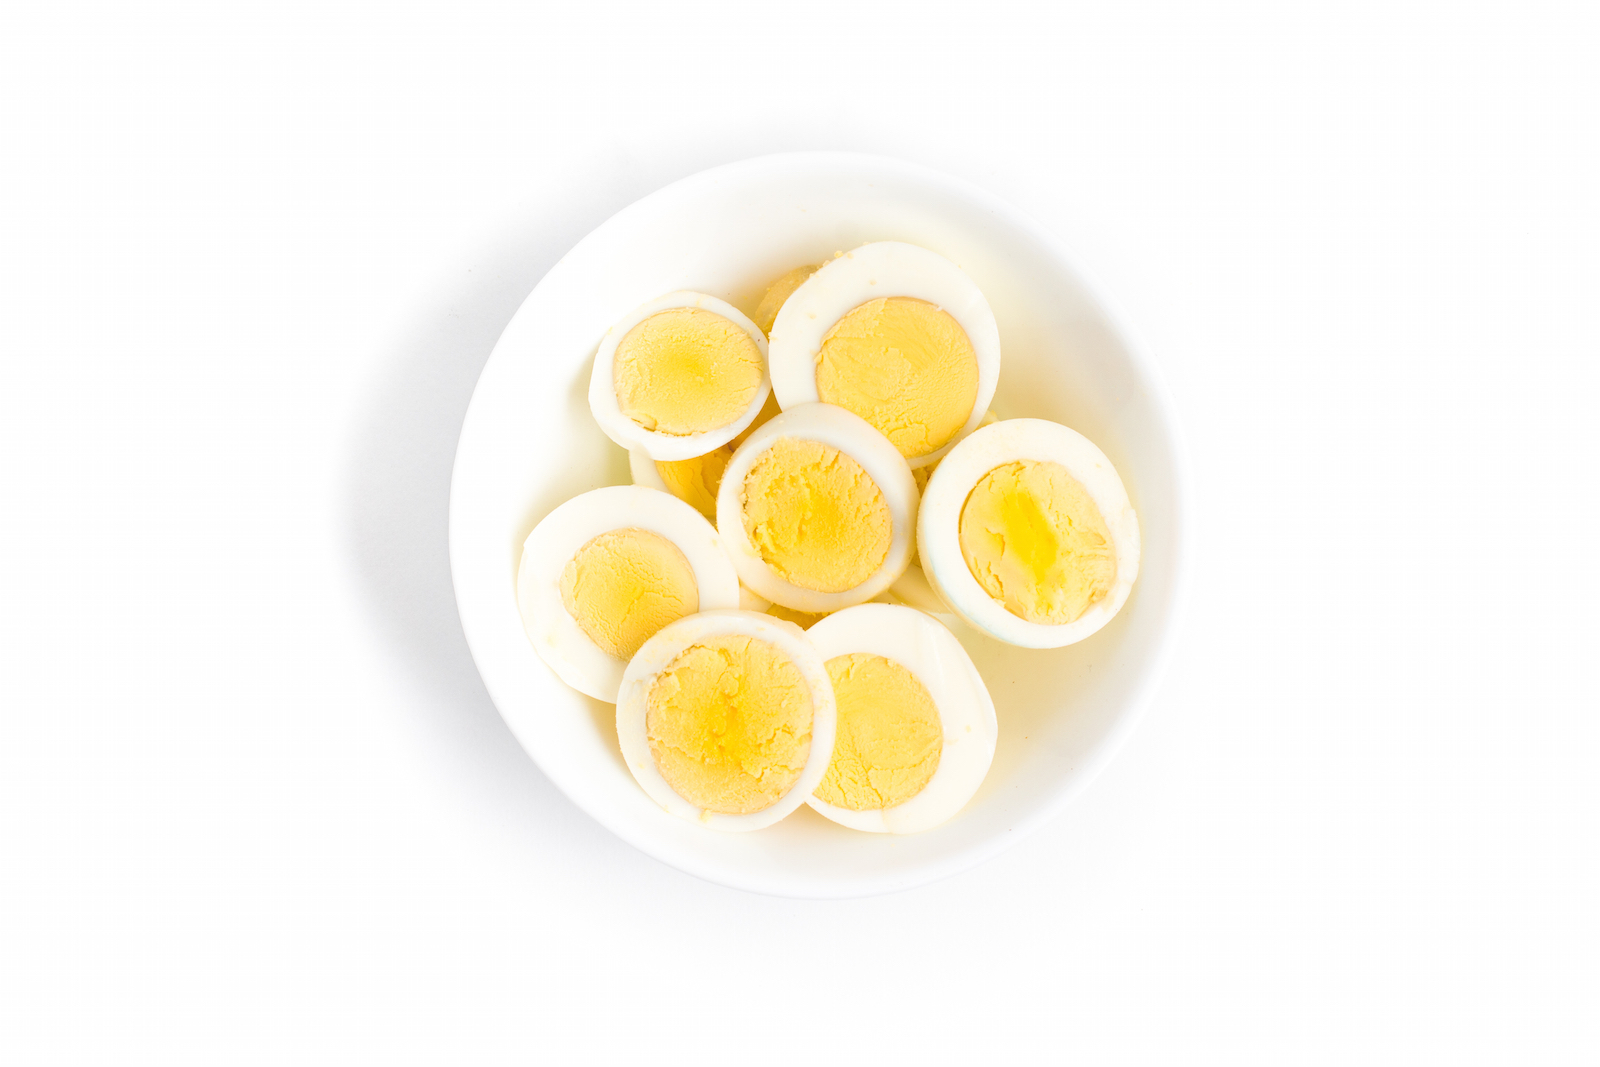 perfect hard-boiled eggs